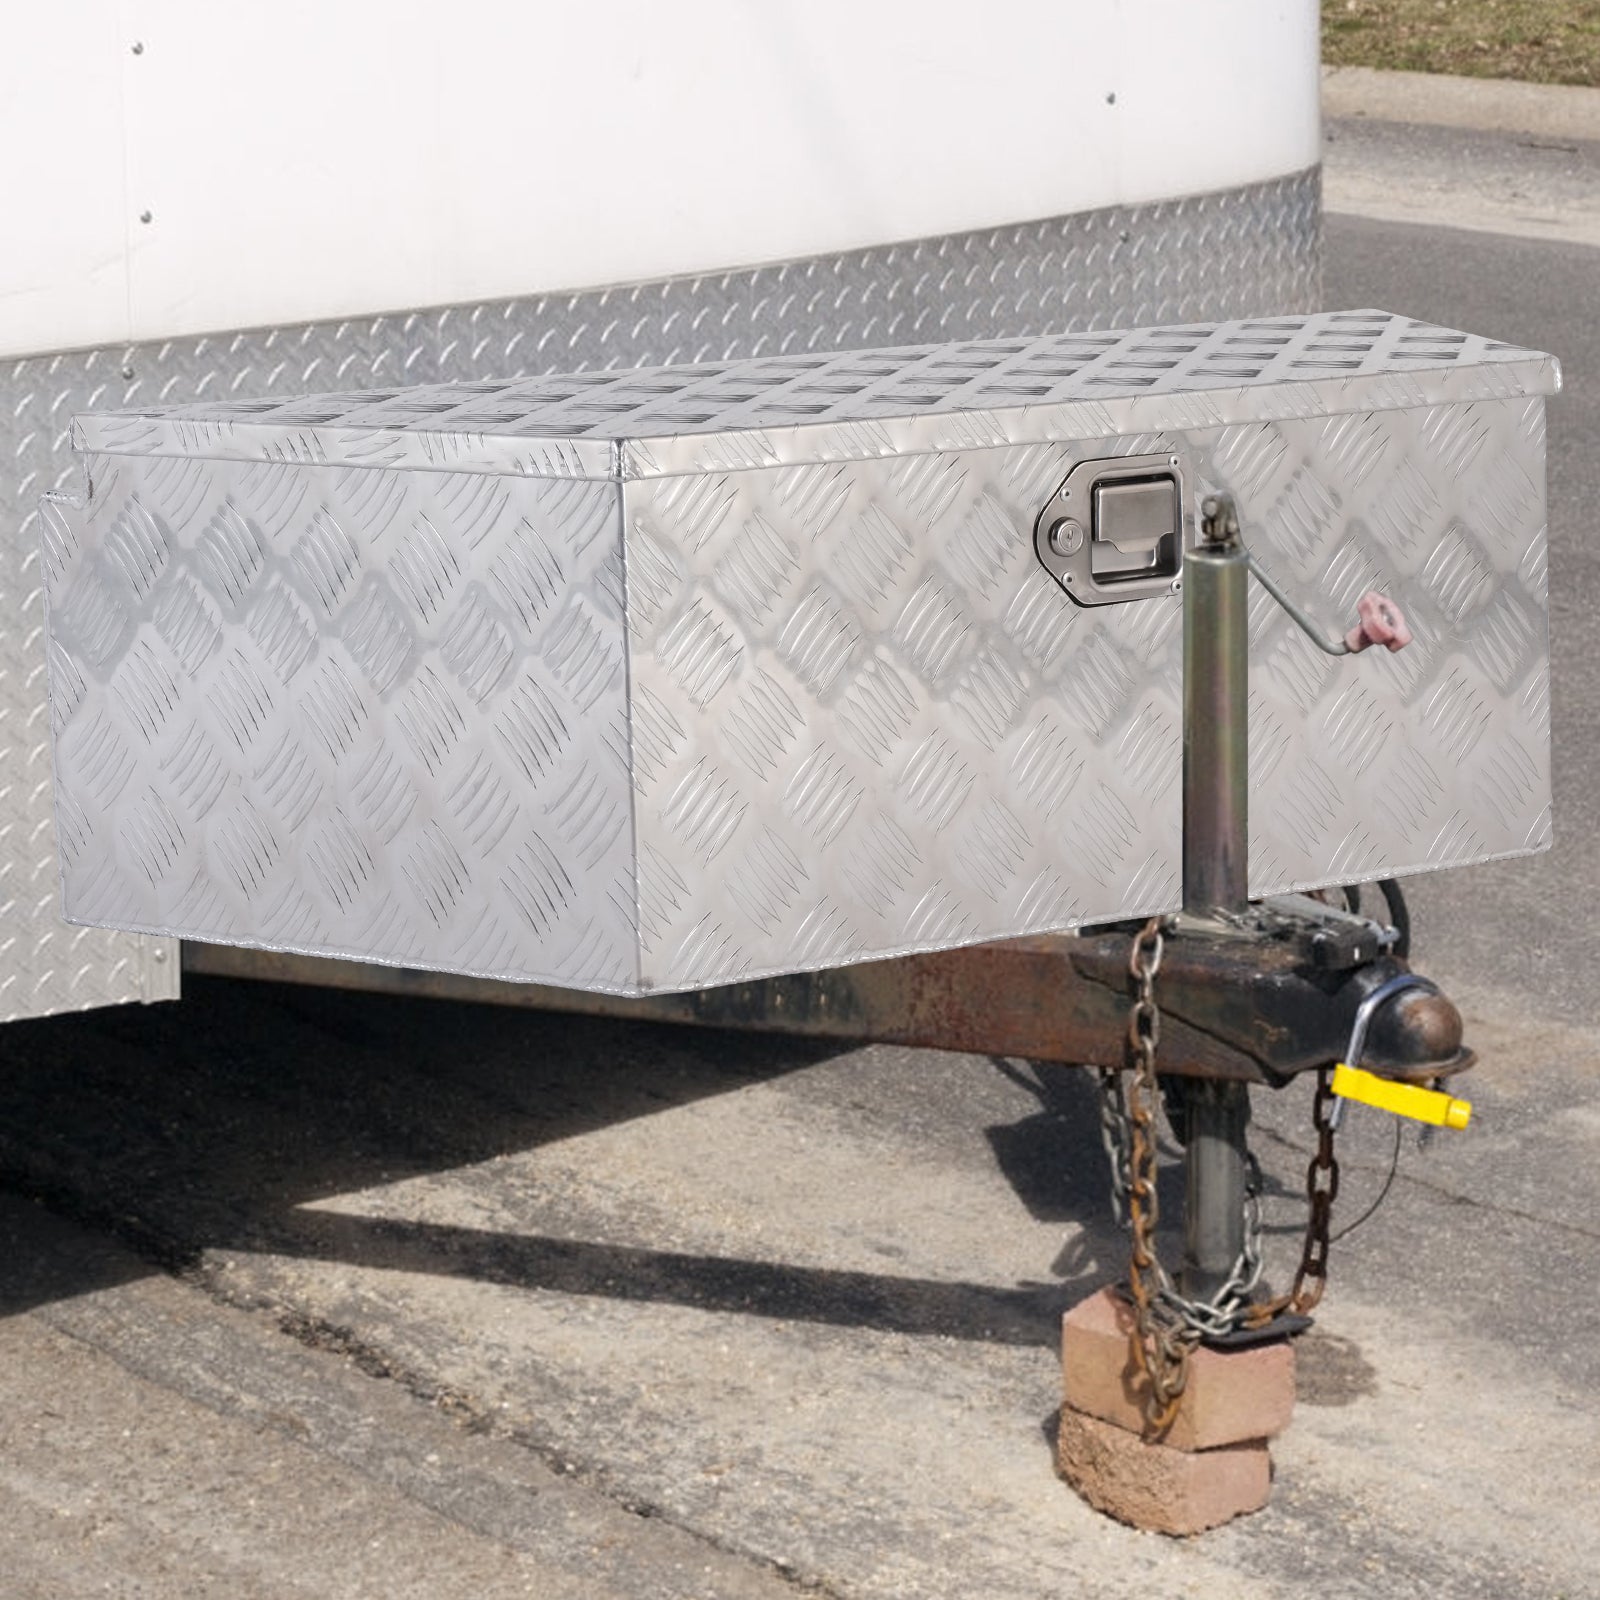 39" Trailer Tongue Box Aluminum Truck Tool Cargo Storage Box Storage Organizer with Lock, Silver